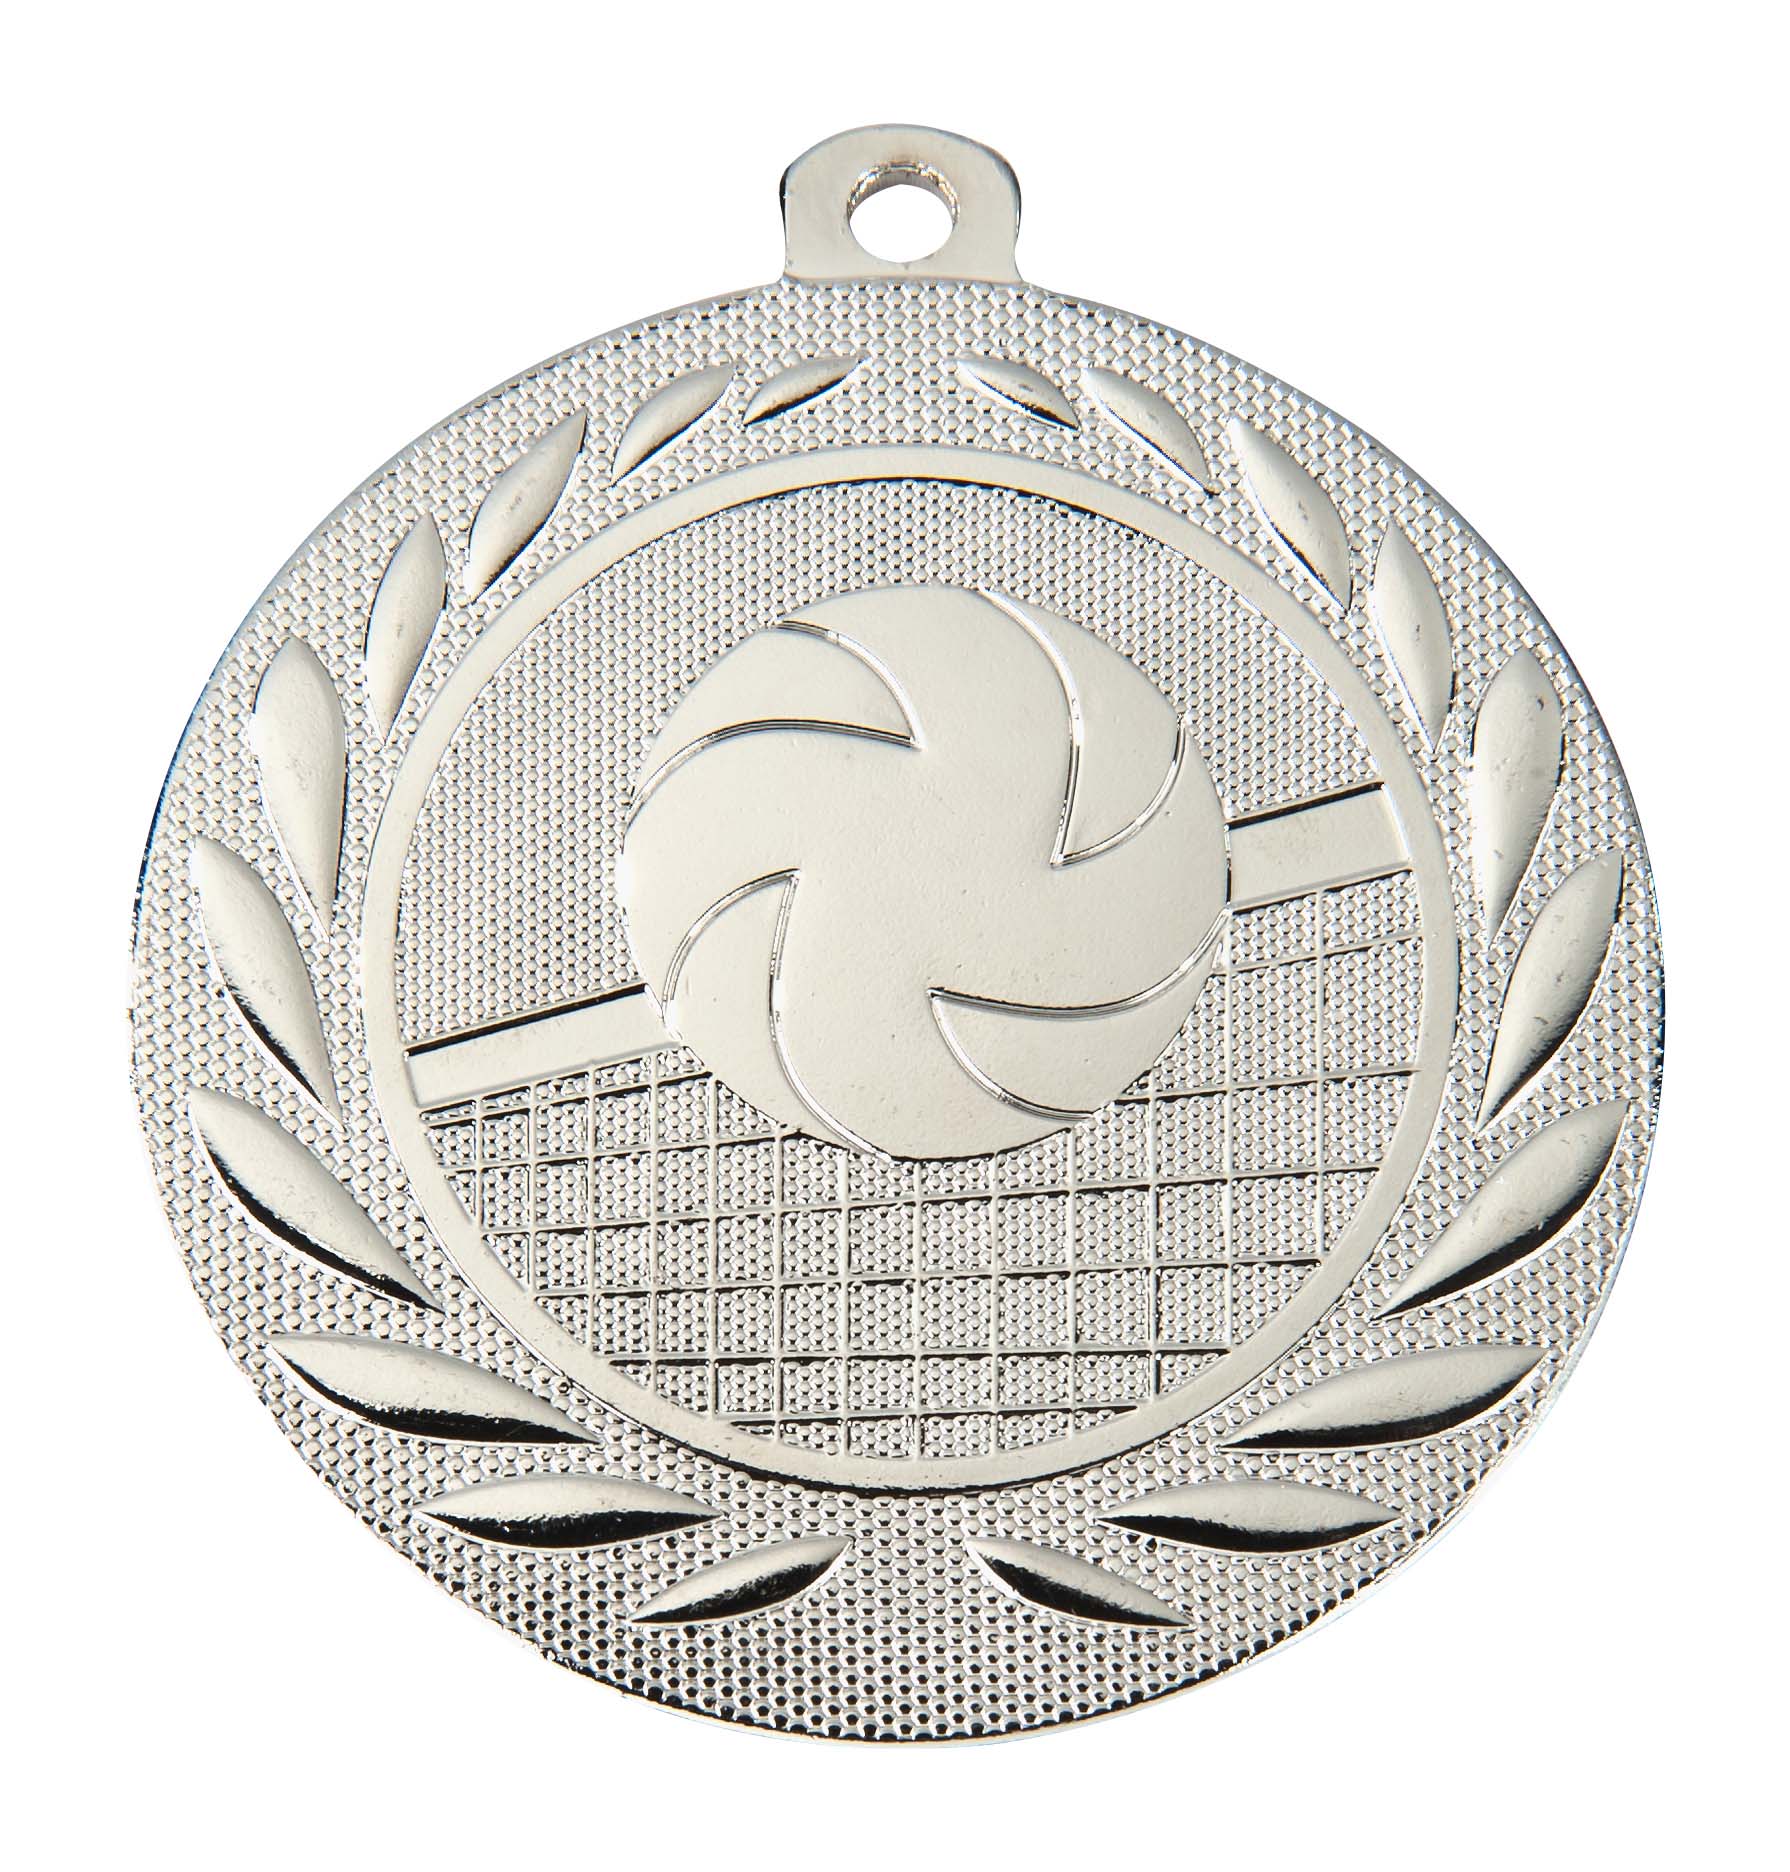 Volleyball-Medaille DI5000N inkl. Band und Beschriftung Silber Unmontiert